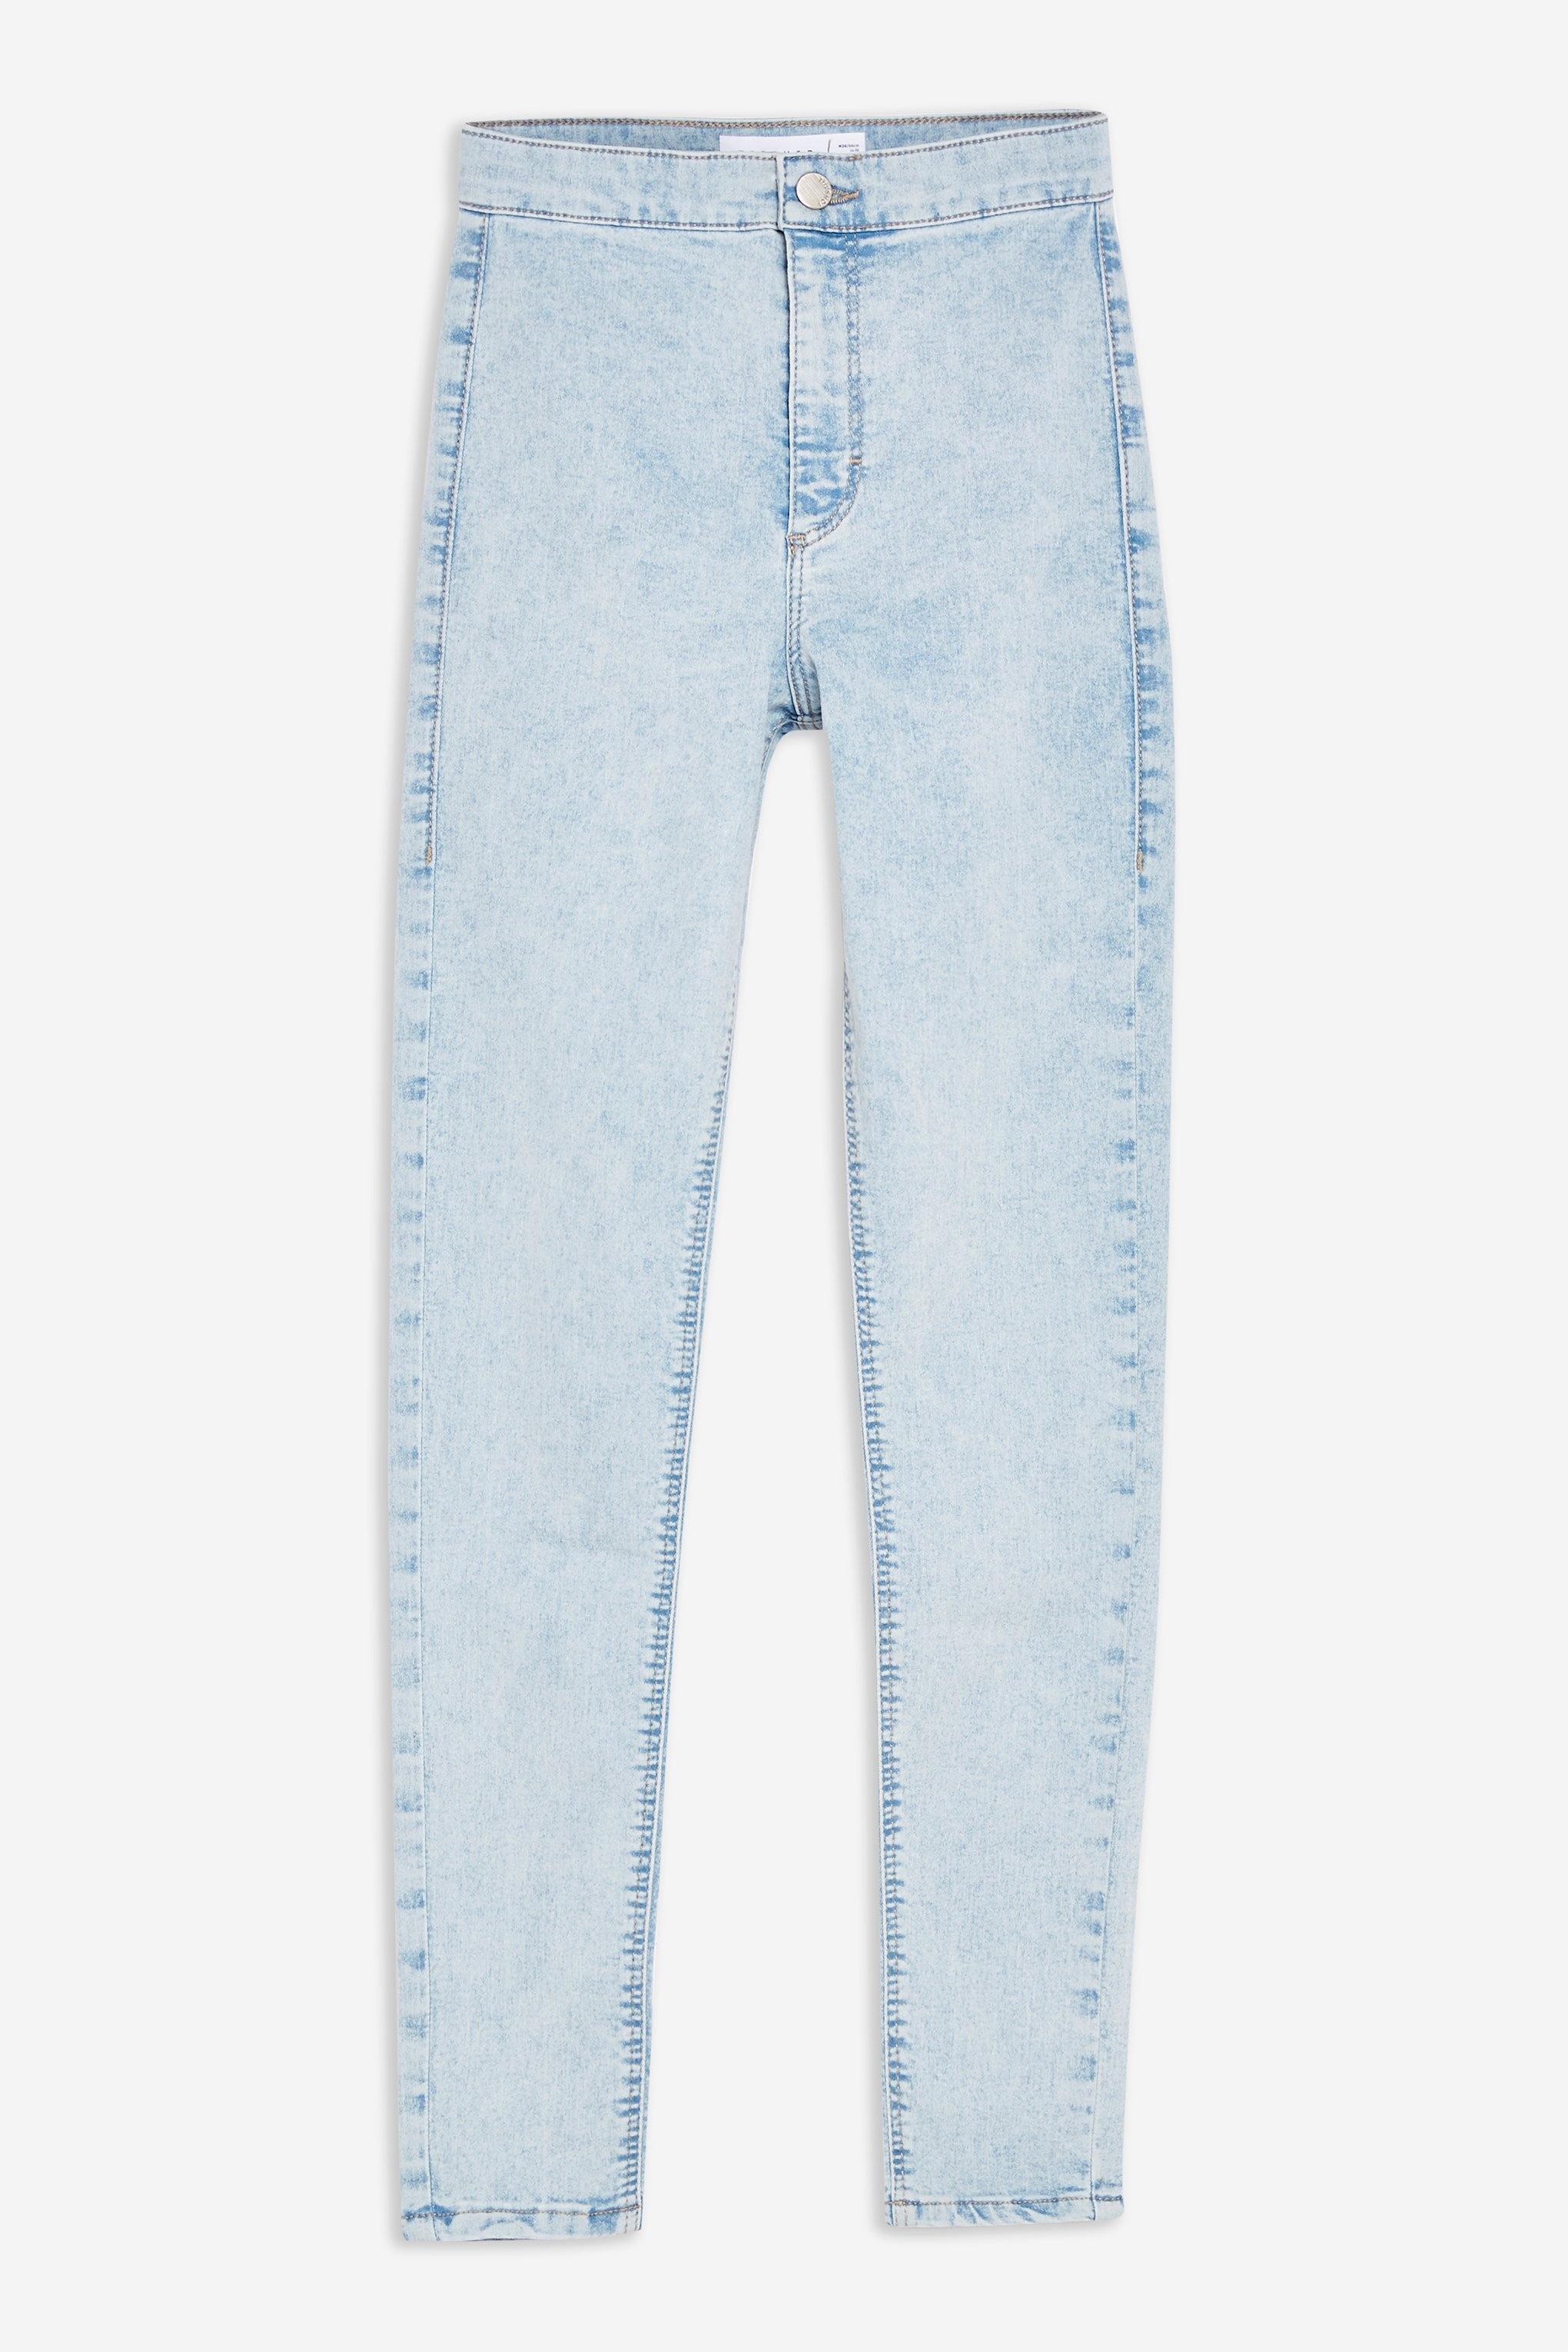 TOPSHOP Bleach Acid Wash Joni Jeans in Blue - Lyst